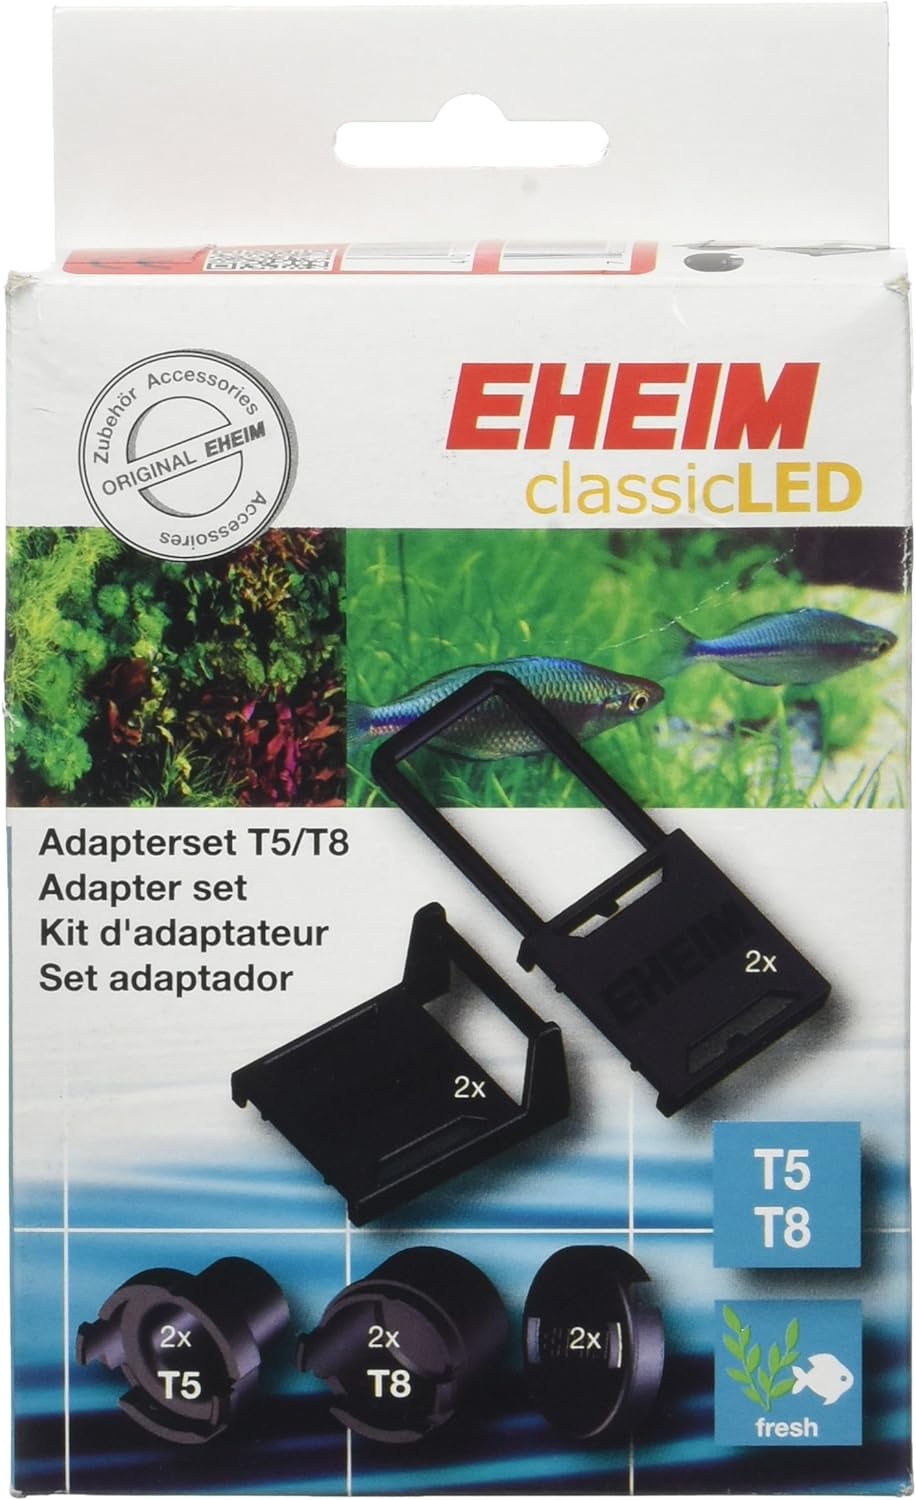 eheim-4200130-lot-e-2-adaptateurs-t5-et-t8-pour-rampes-classicled